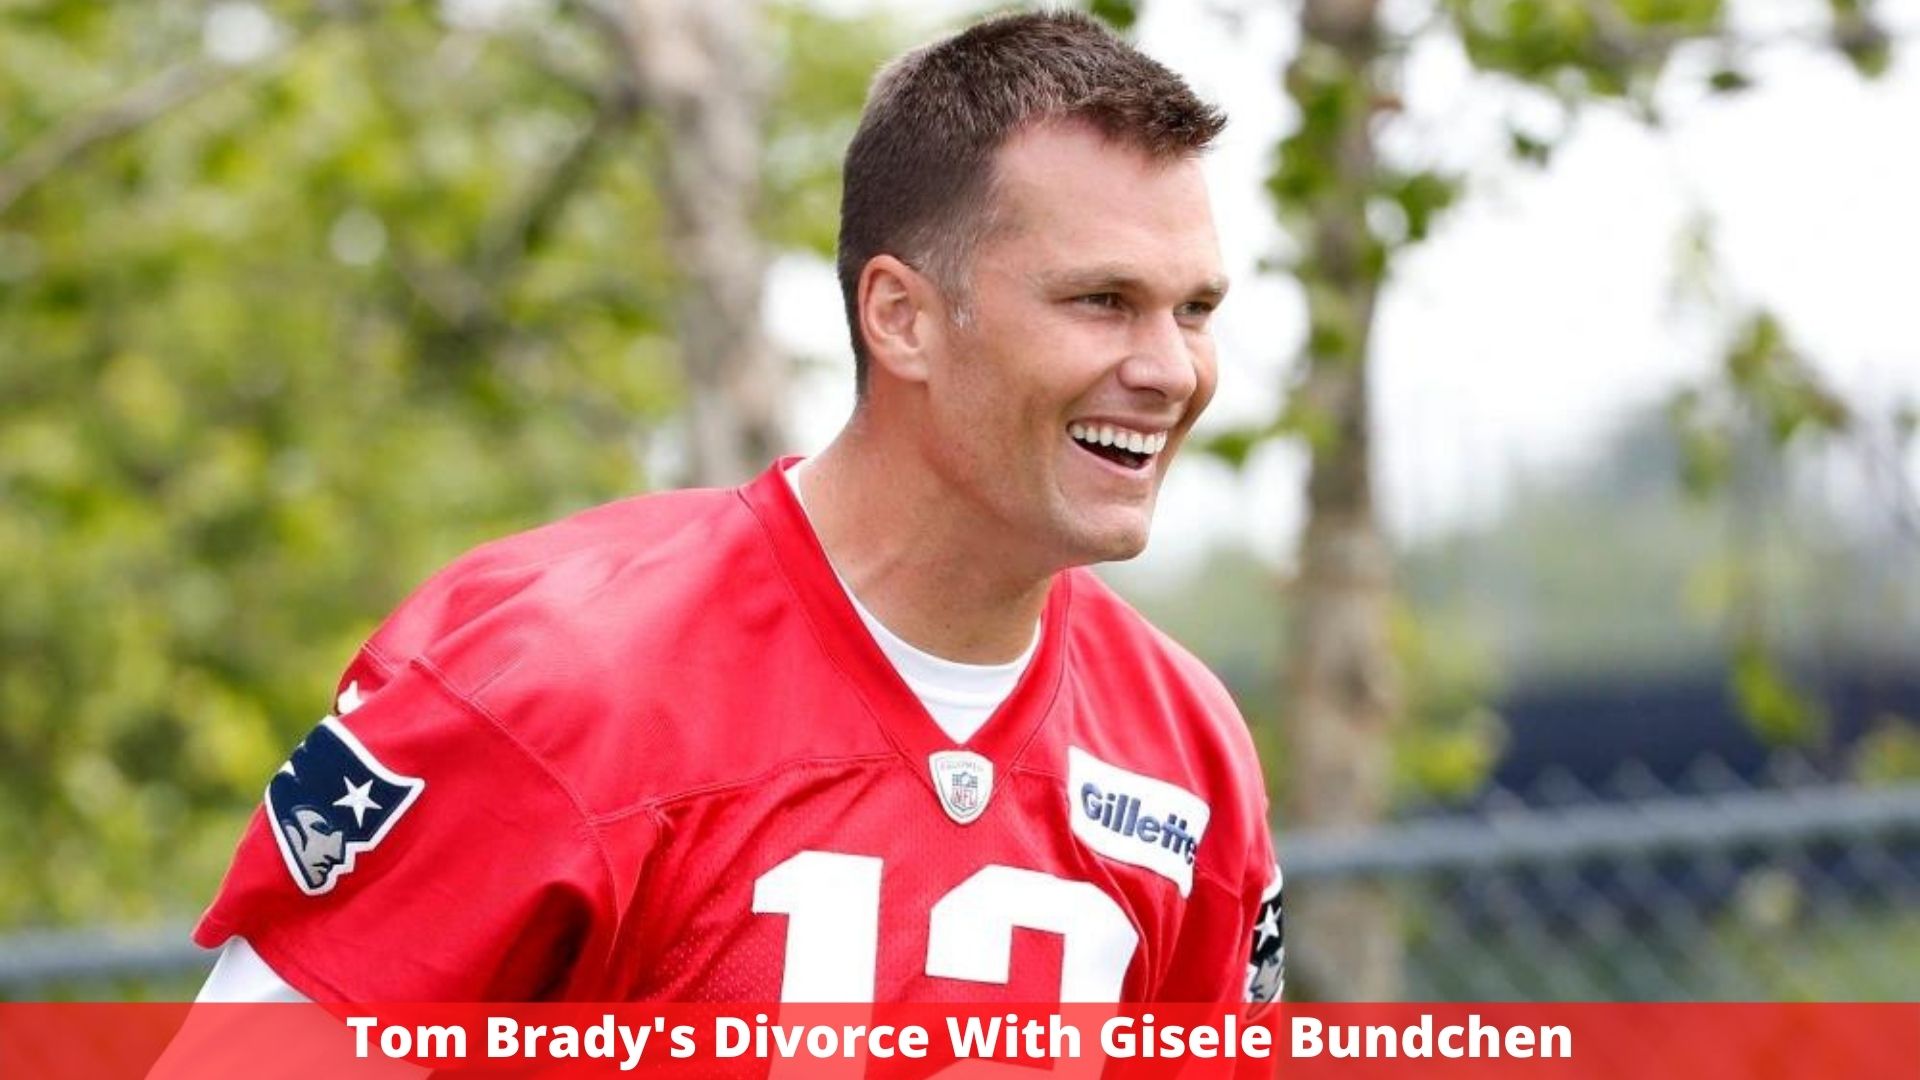 Tom Brady's Divorce With Gisele Bundchen